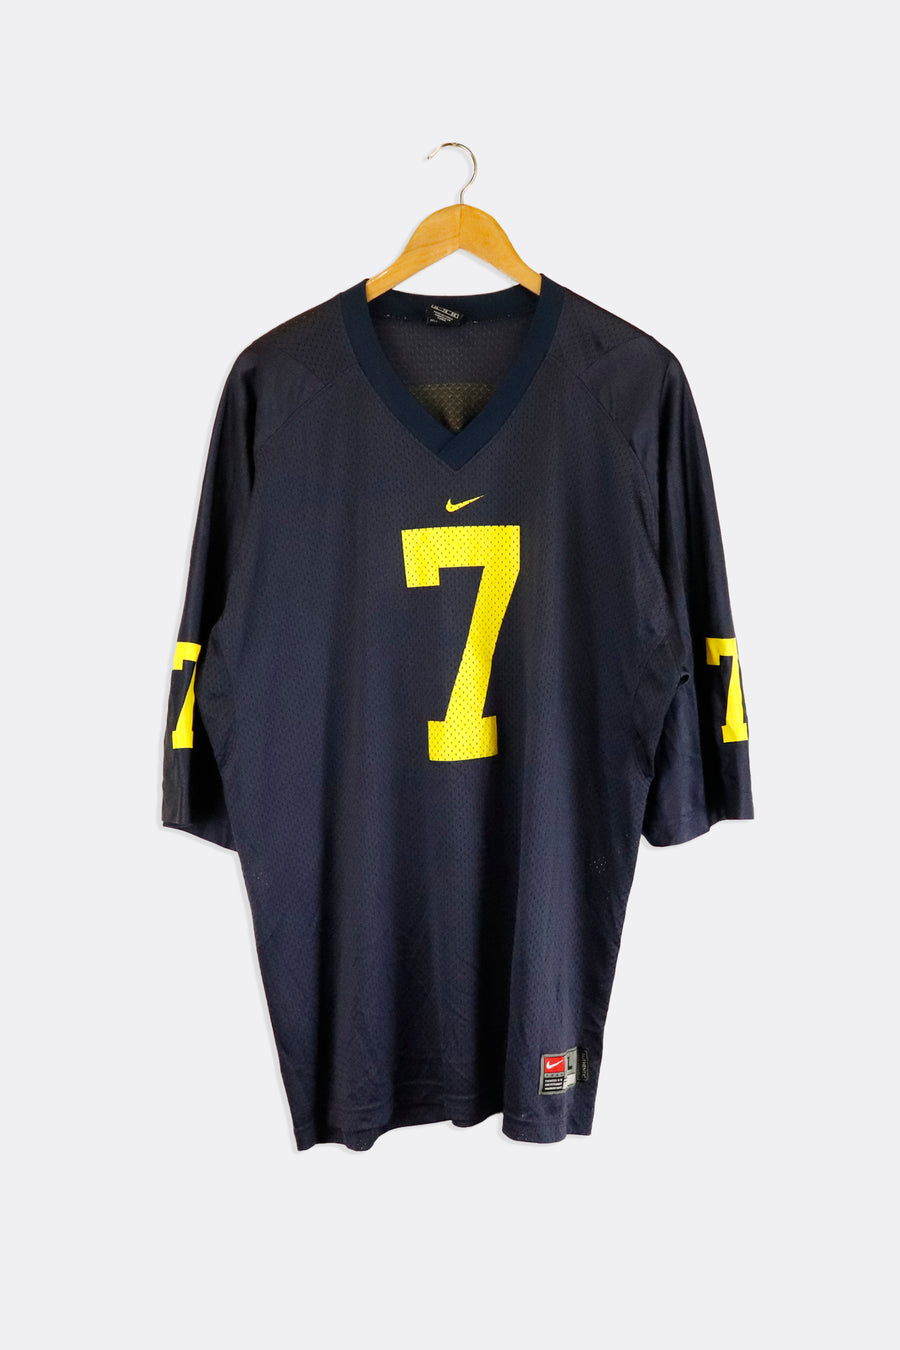 Vintage Nike Mesh Football Style Jersey Number 7 Vinyl Outerwear Sz XL